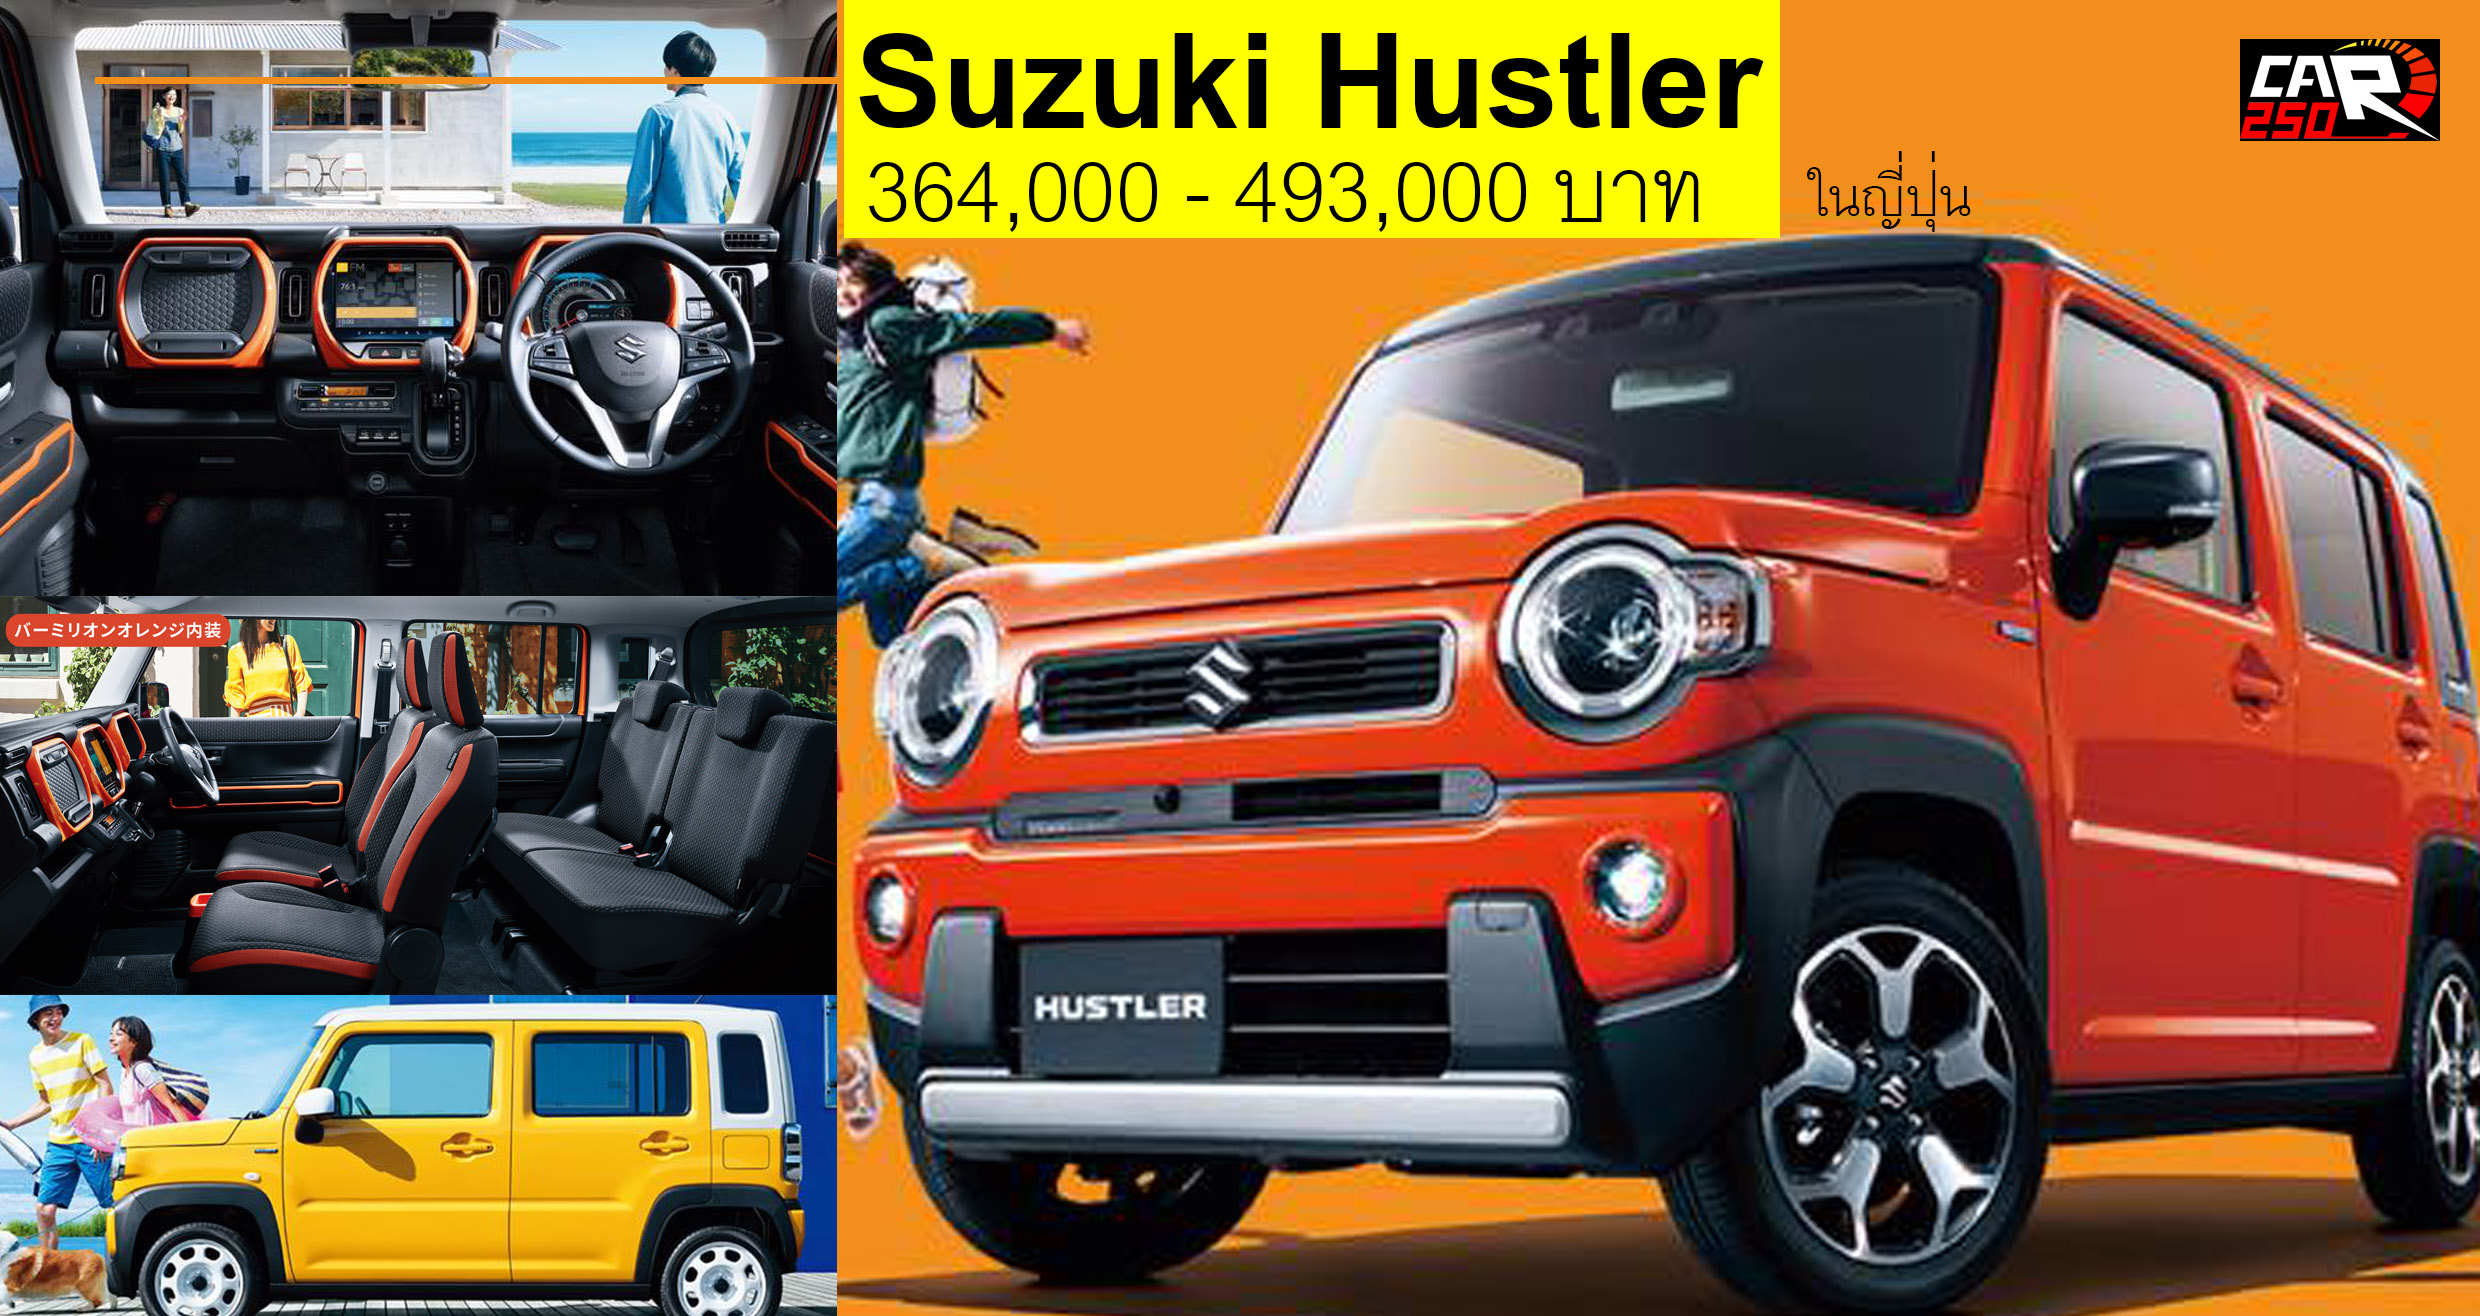 Suzuki Hustler เริ่มต้น 364,000 บาท + 660cc. Hybrid เทอร์โบ 49-64 แรงม้า ในญีปุ่น